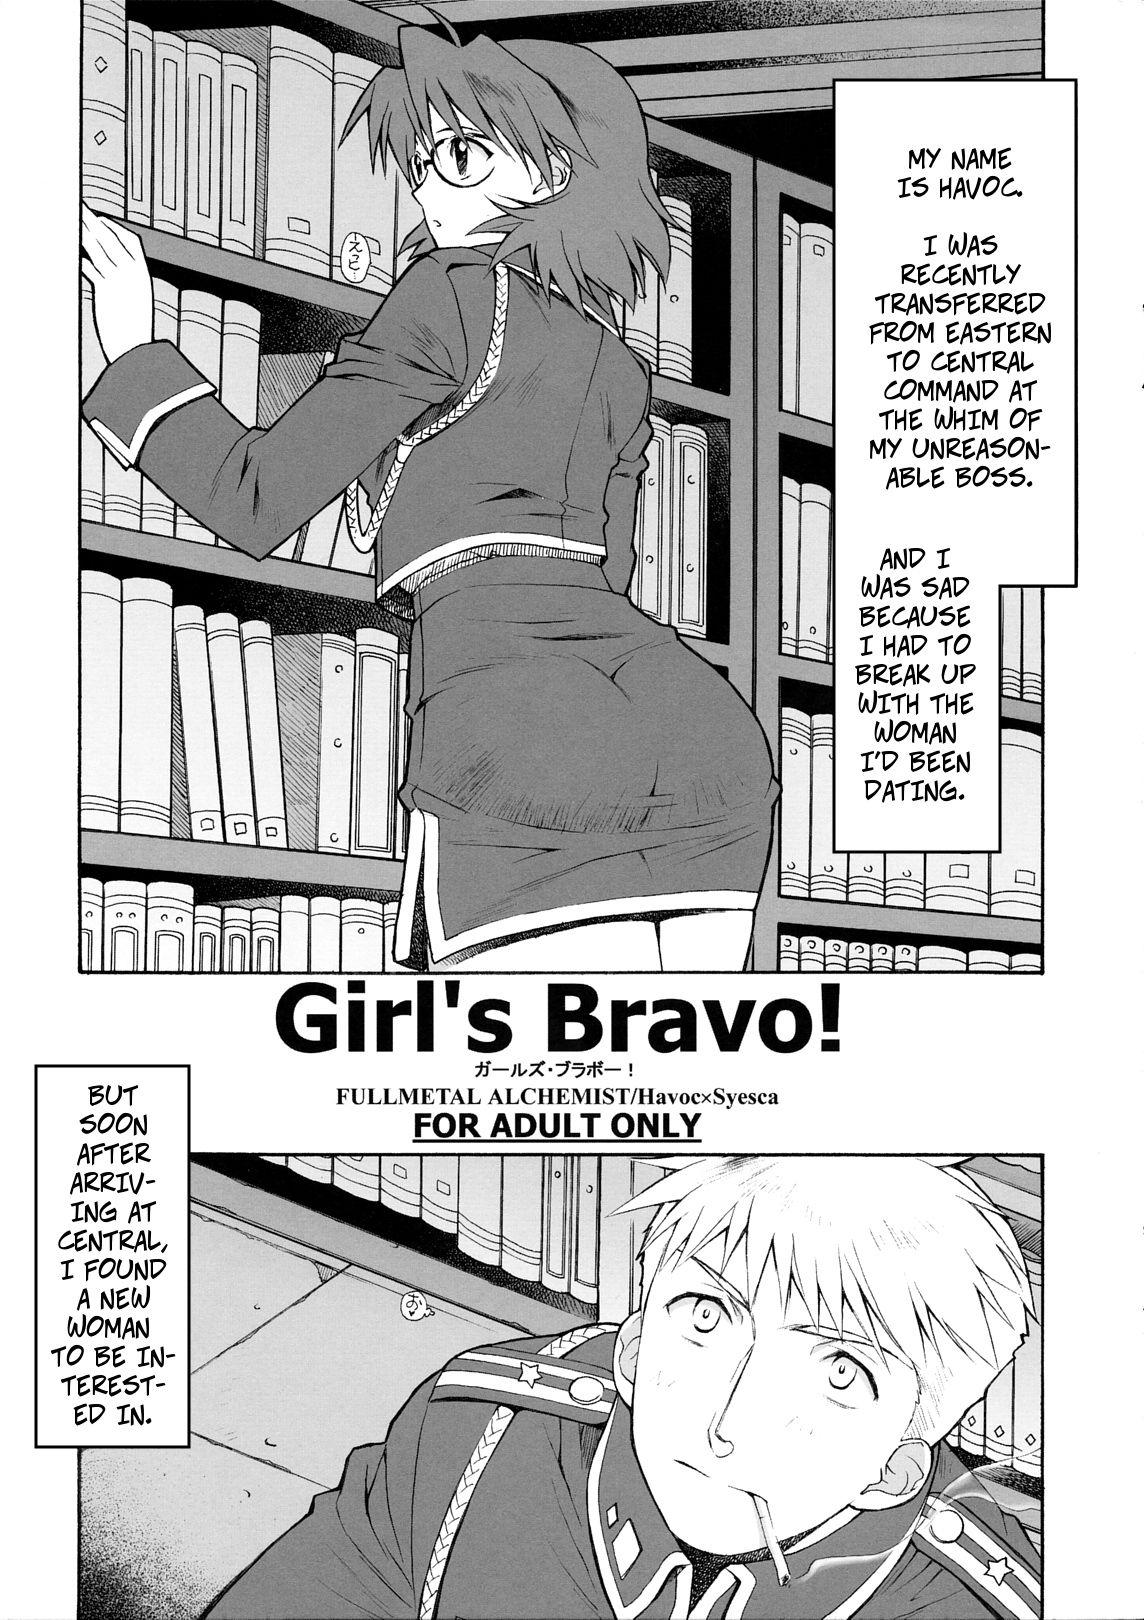 Hood Girl's Bravo! - Fullmetal alchemist Big Penis - Page 1